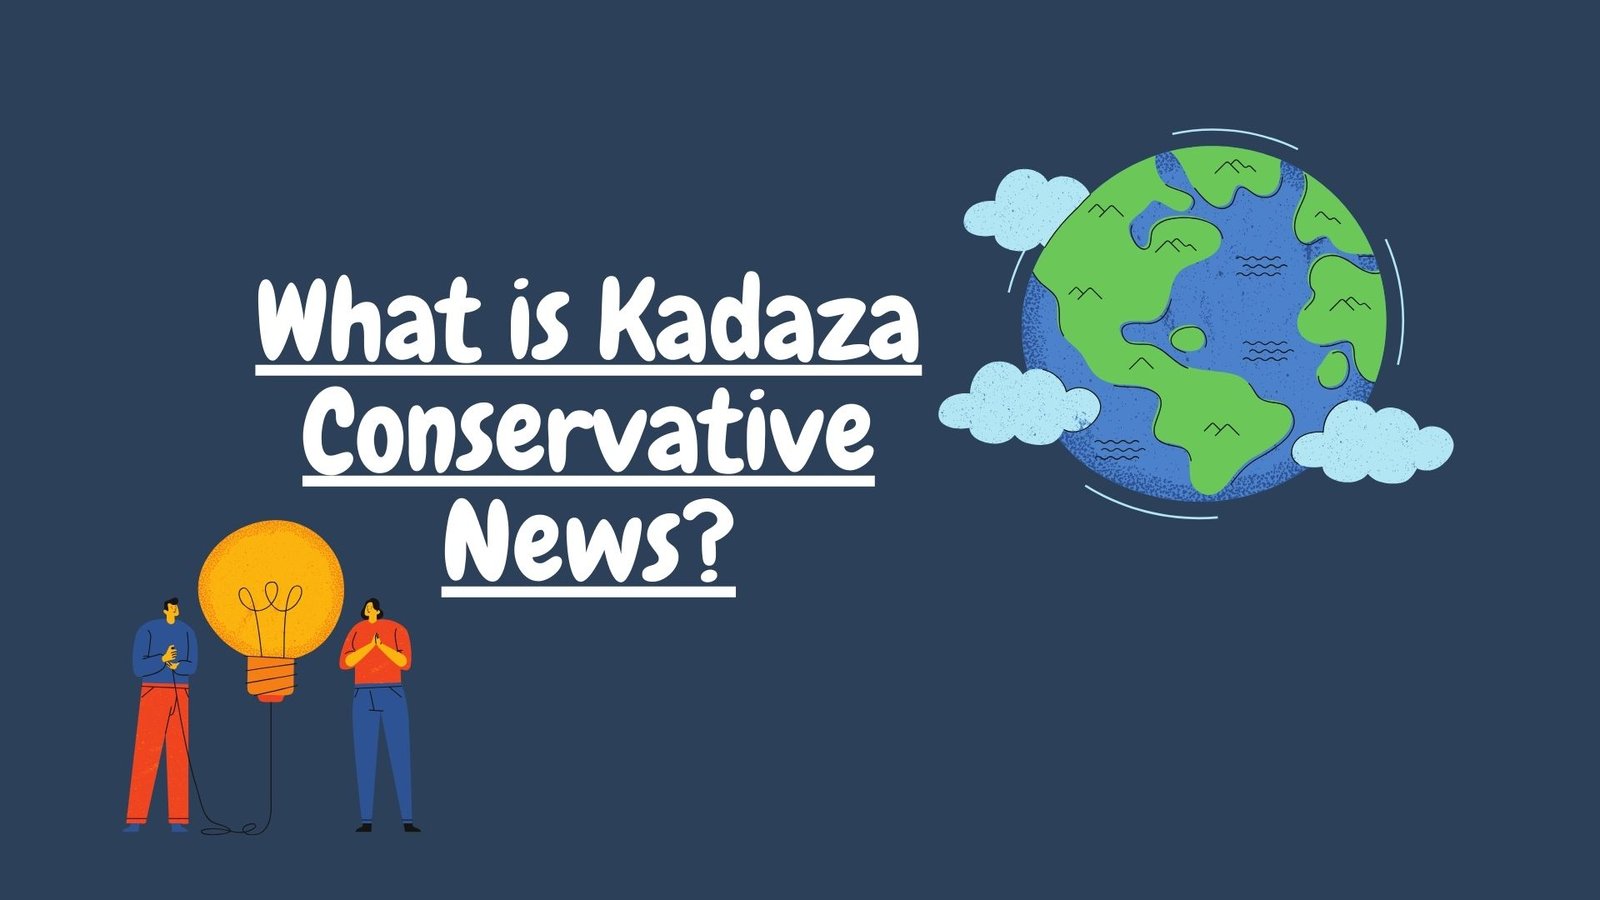 kadaza conservative news